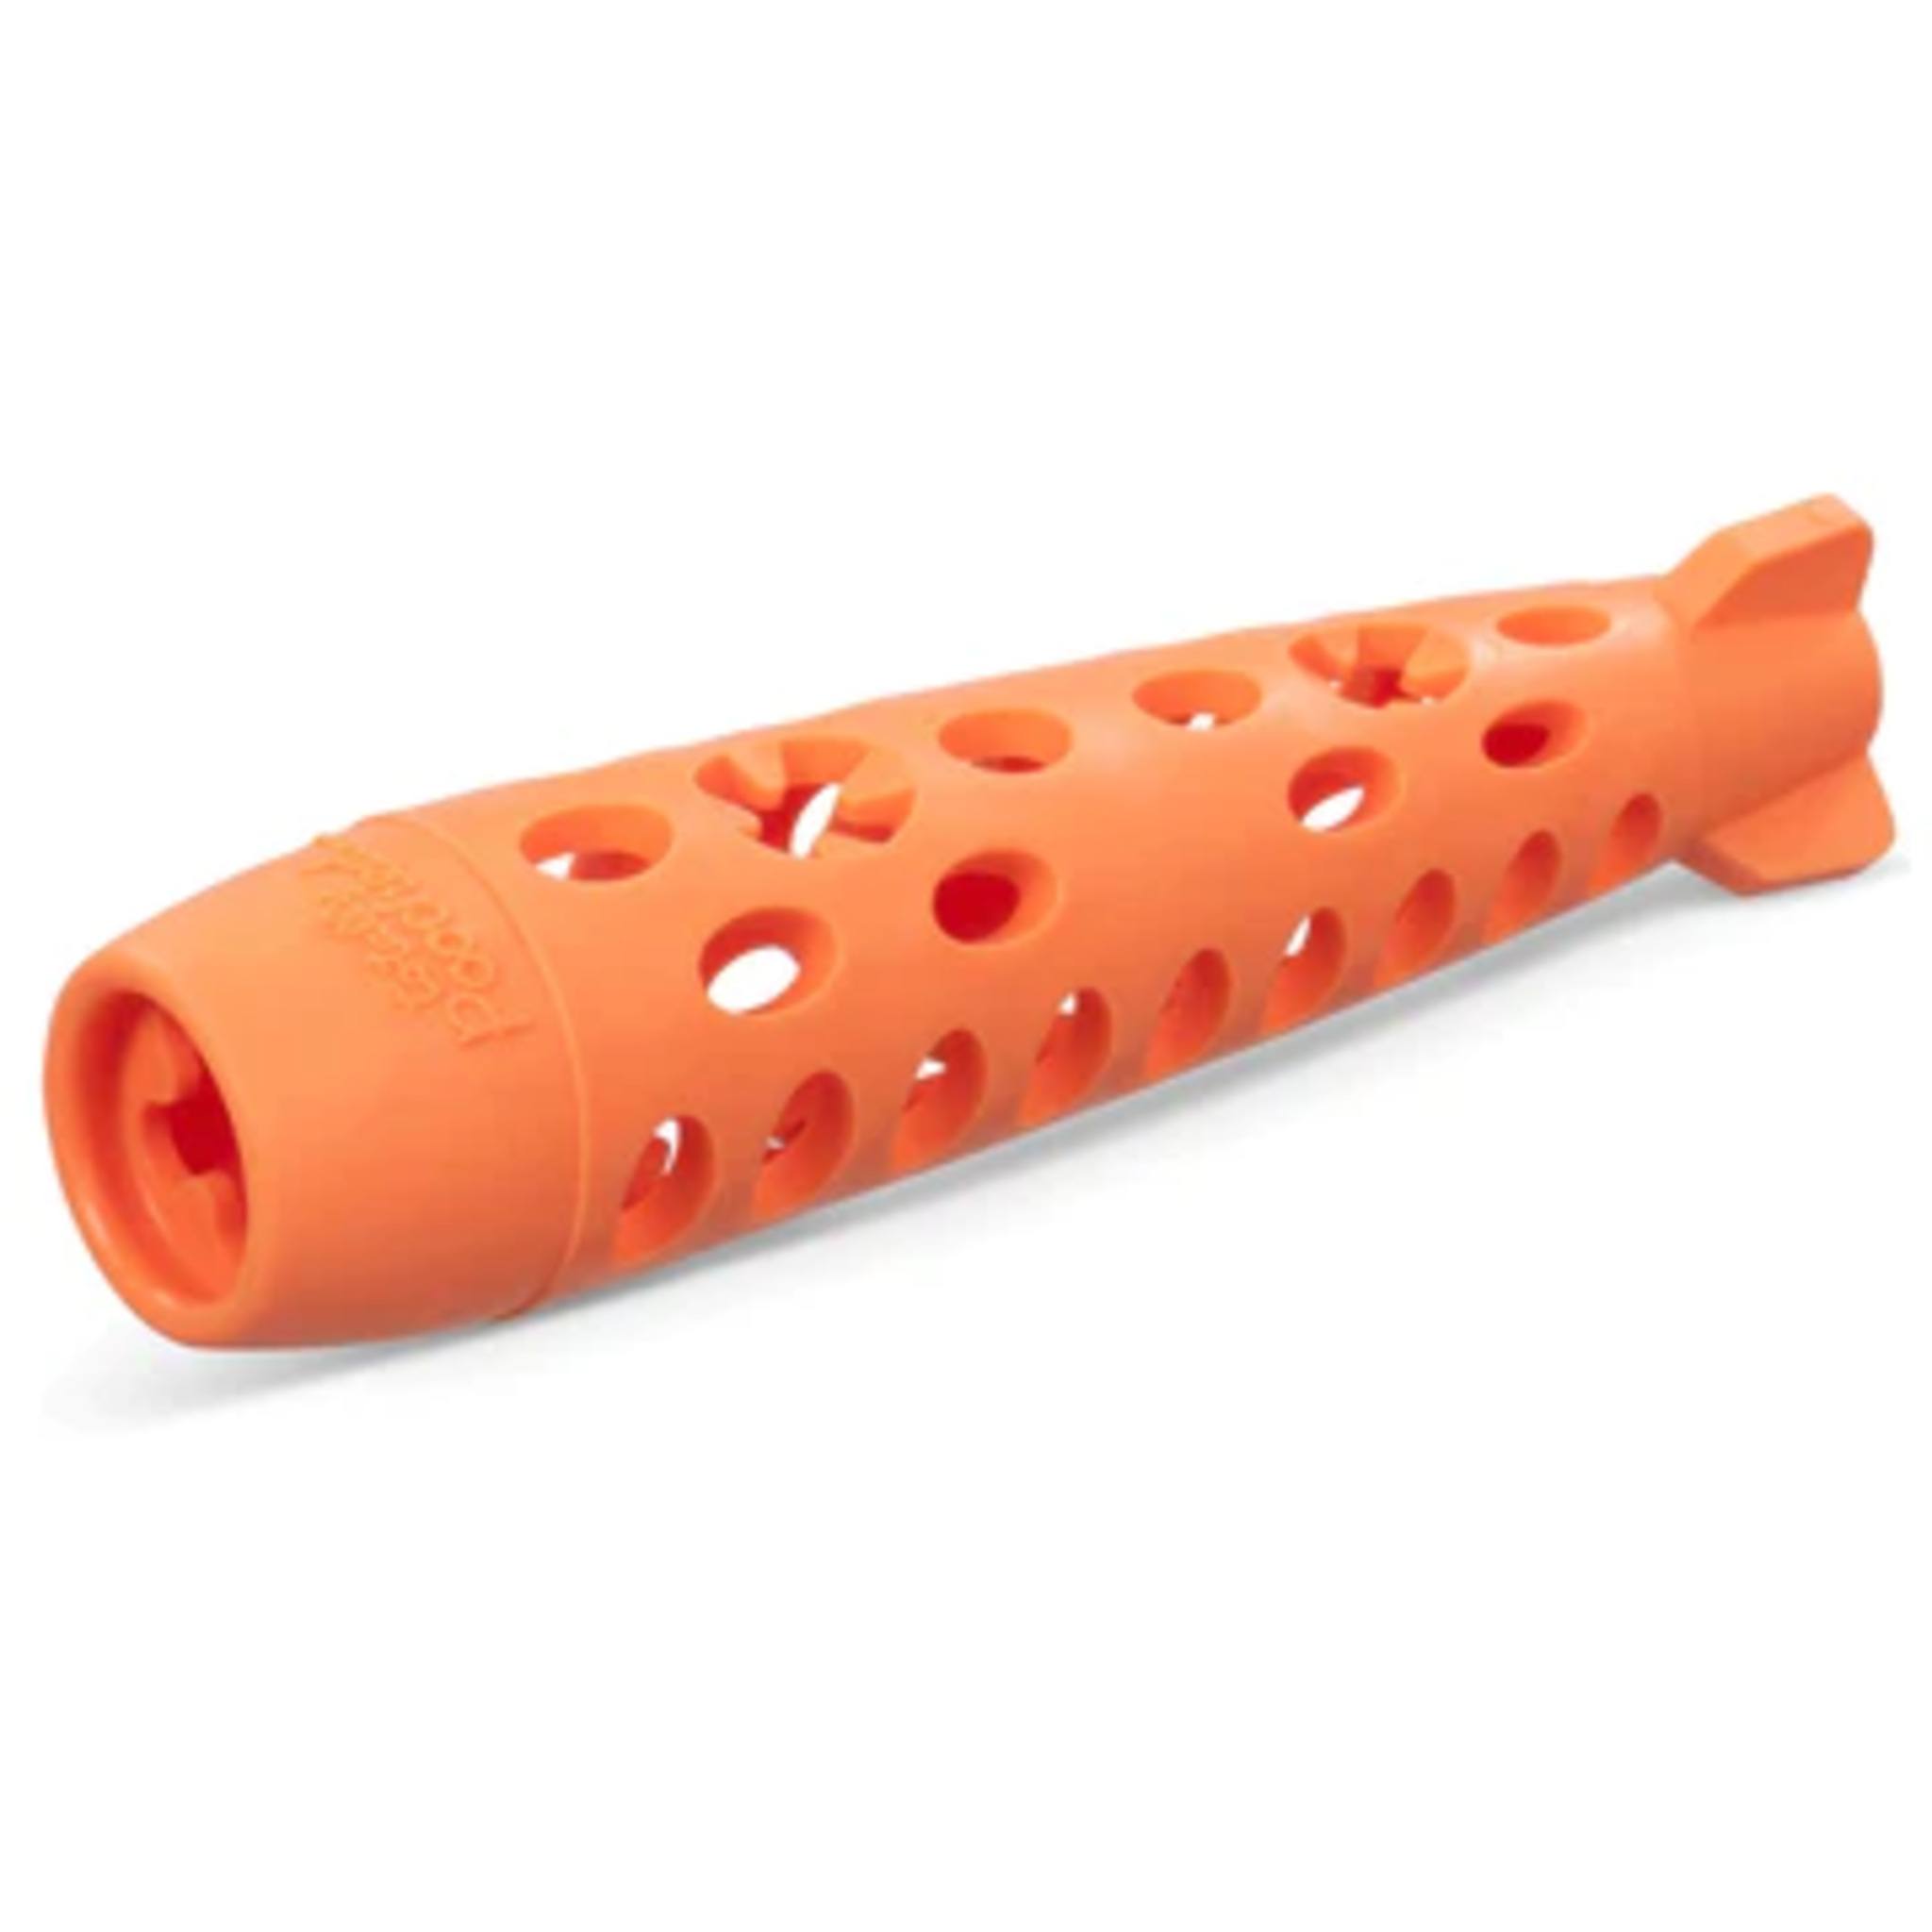 Totally Pooched Stuff'n Chew Rocket Stick 10" Orange Dog Toy